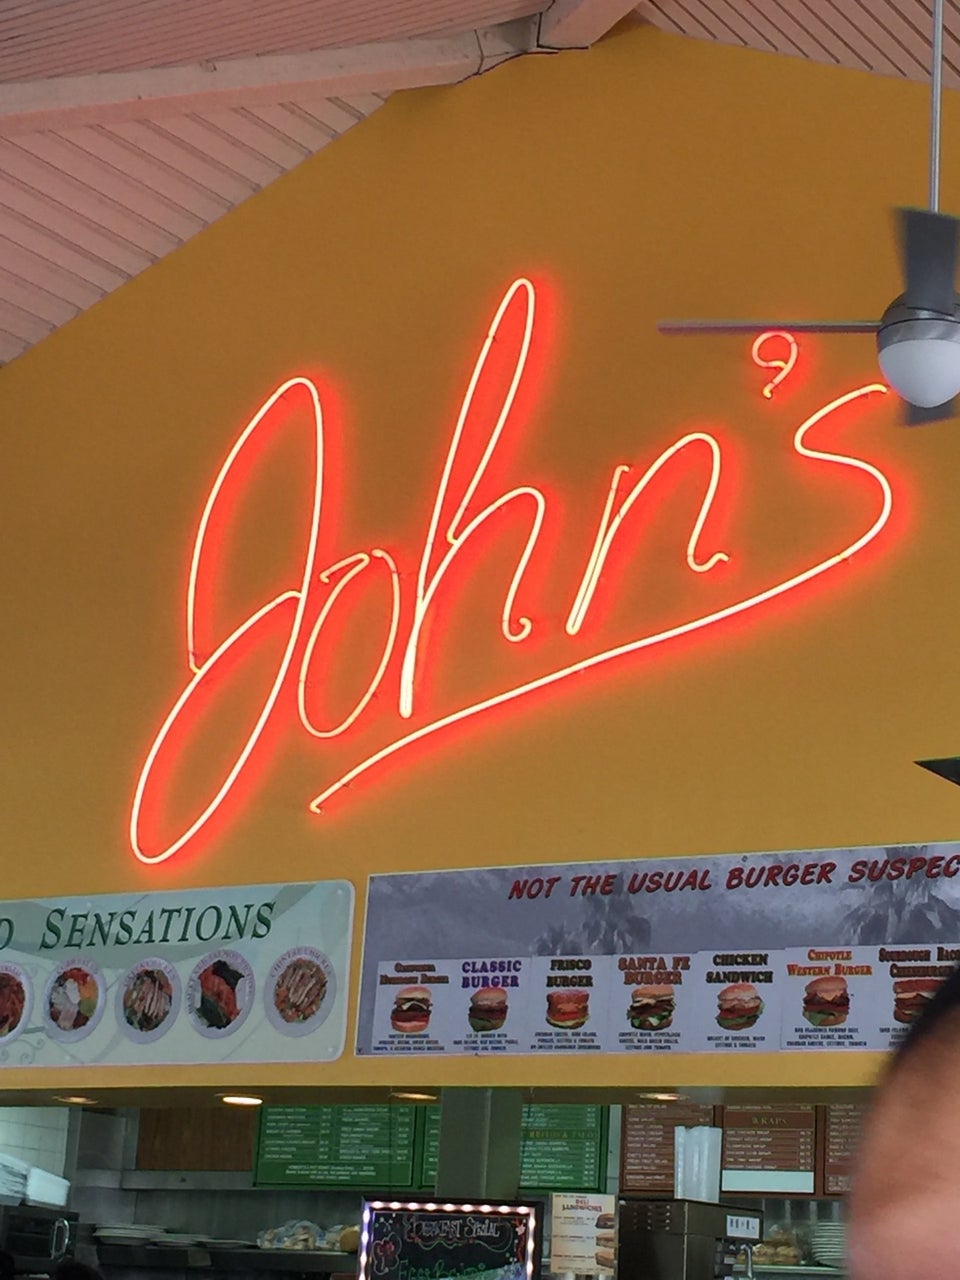 Photo of John's Restaurant - Palm Springs, CA